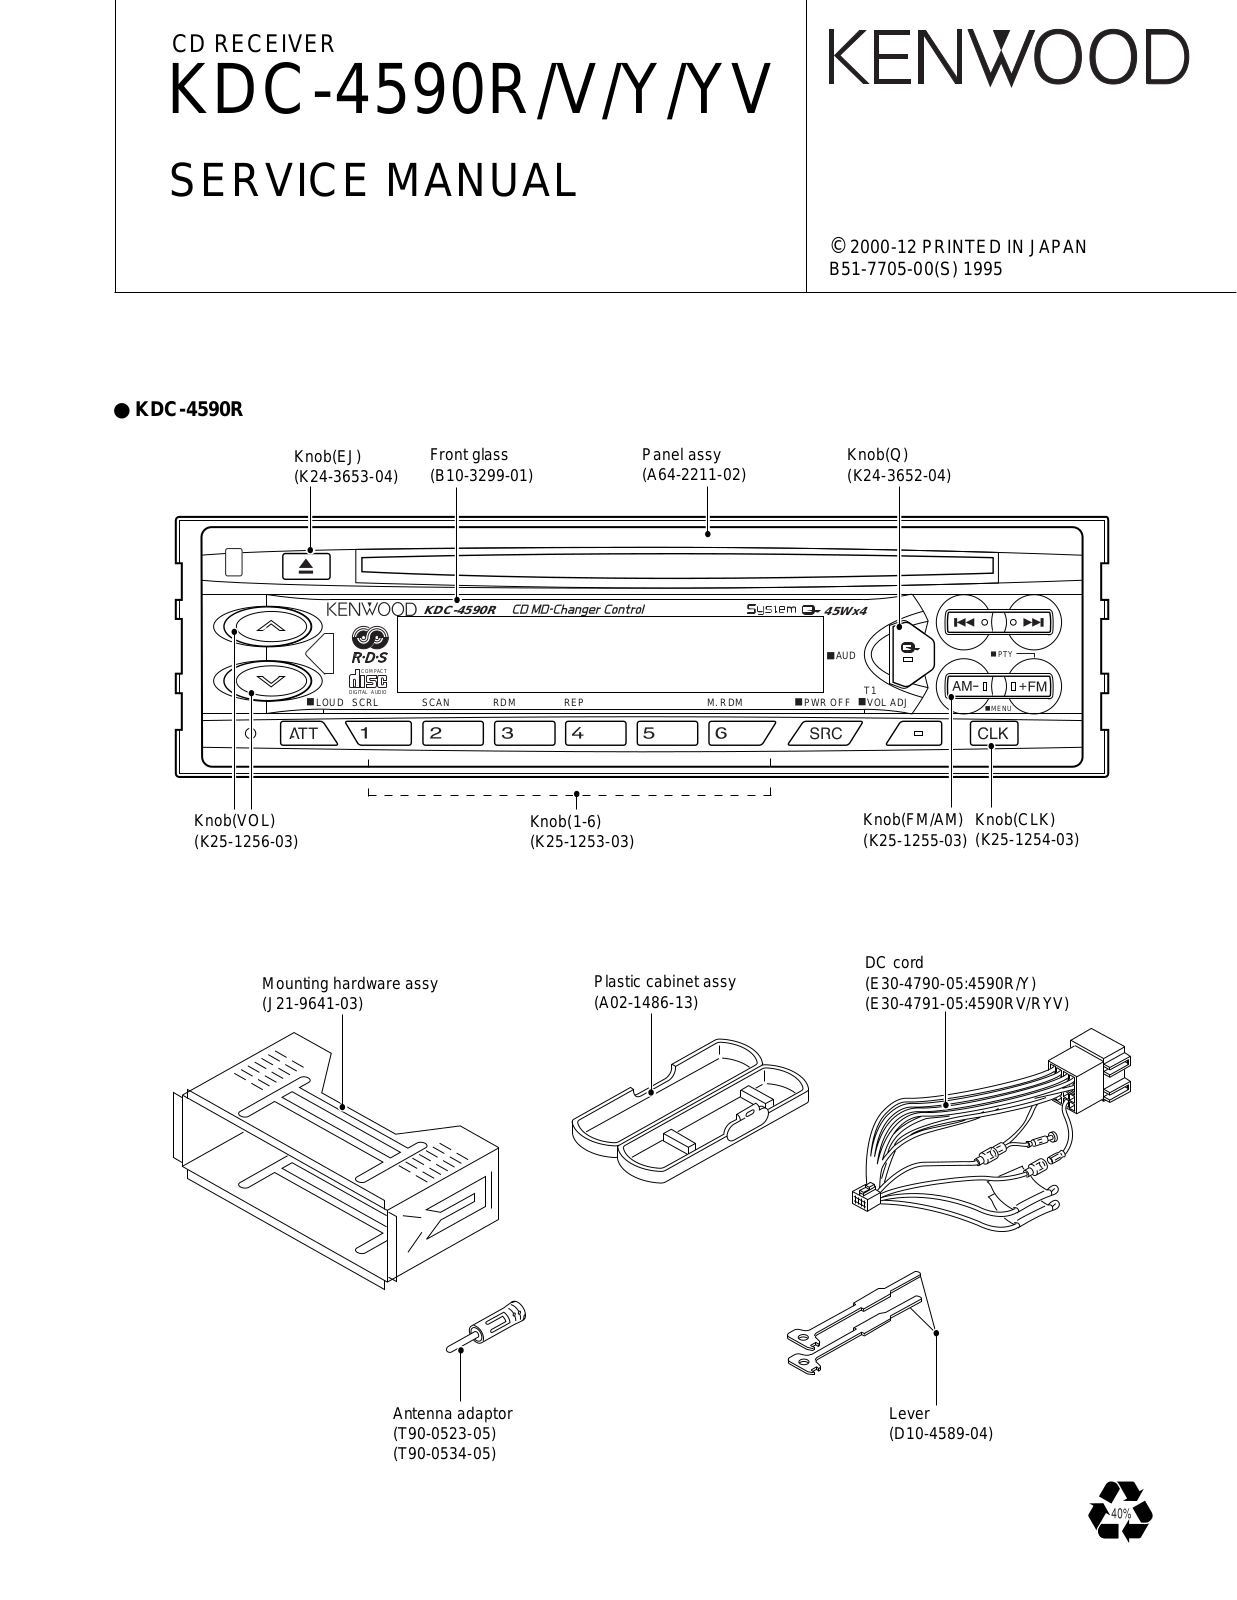 Kenwood KDC-4590-YV, KDC-4590-Y, KDC-4590-V, KDC-4590-R Service Manual